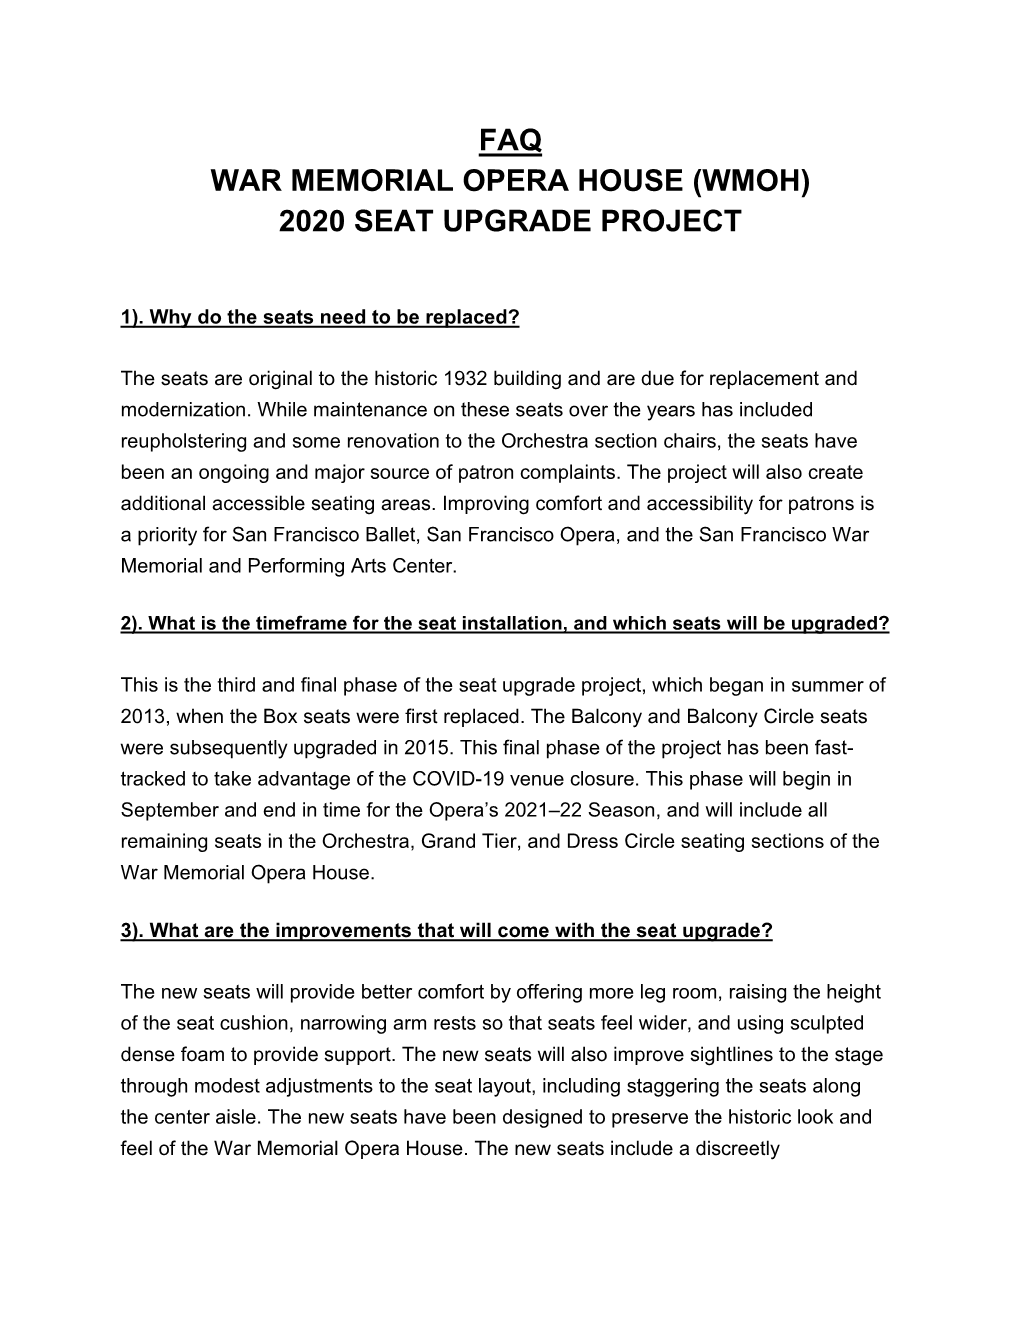 Faq War Memorial Opera House (Wmoh) 2020 Seat